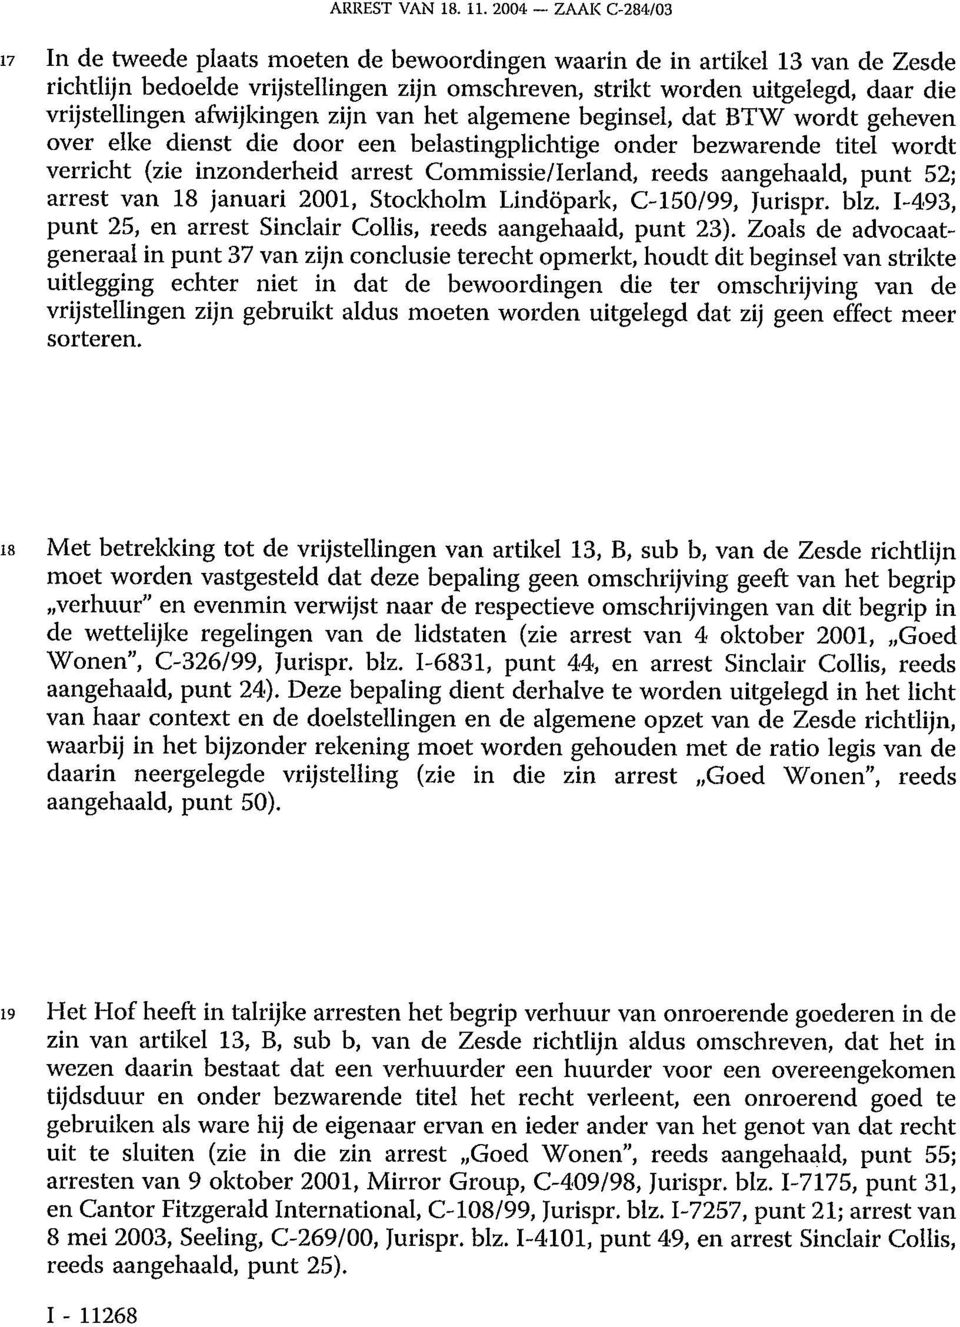 punt 52; arrest van 18 januari 2001, Stockholm Lindöpark, C-150/99, Jurispr. blz. I-493, punt 25, en arrest Sinclair Collis, reeds aangehaald, punt 23).